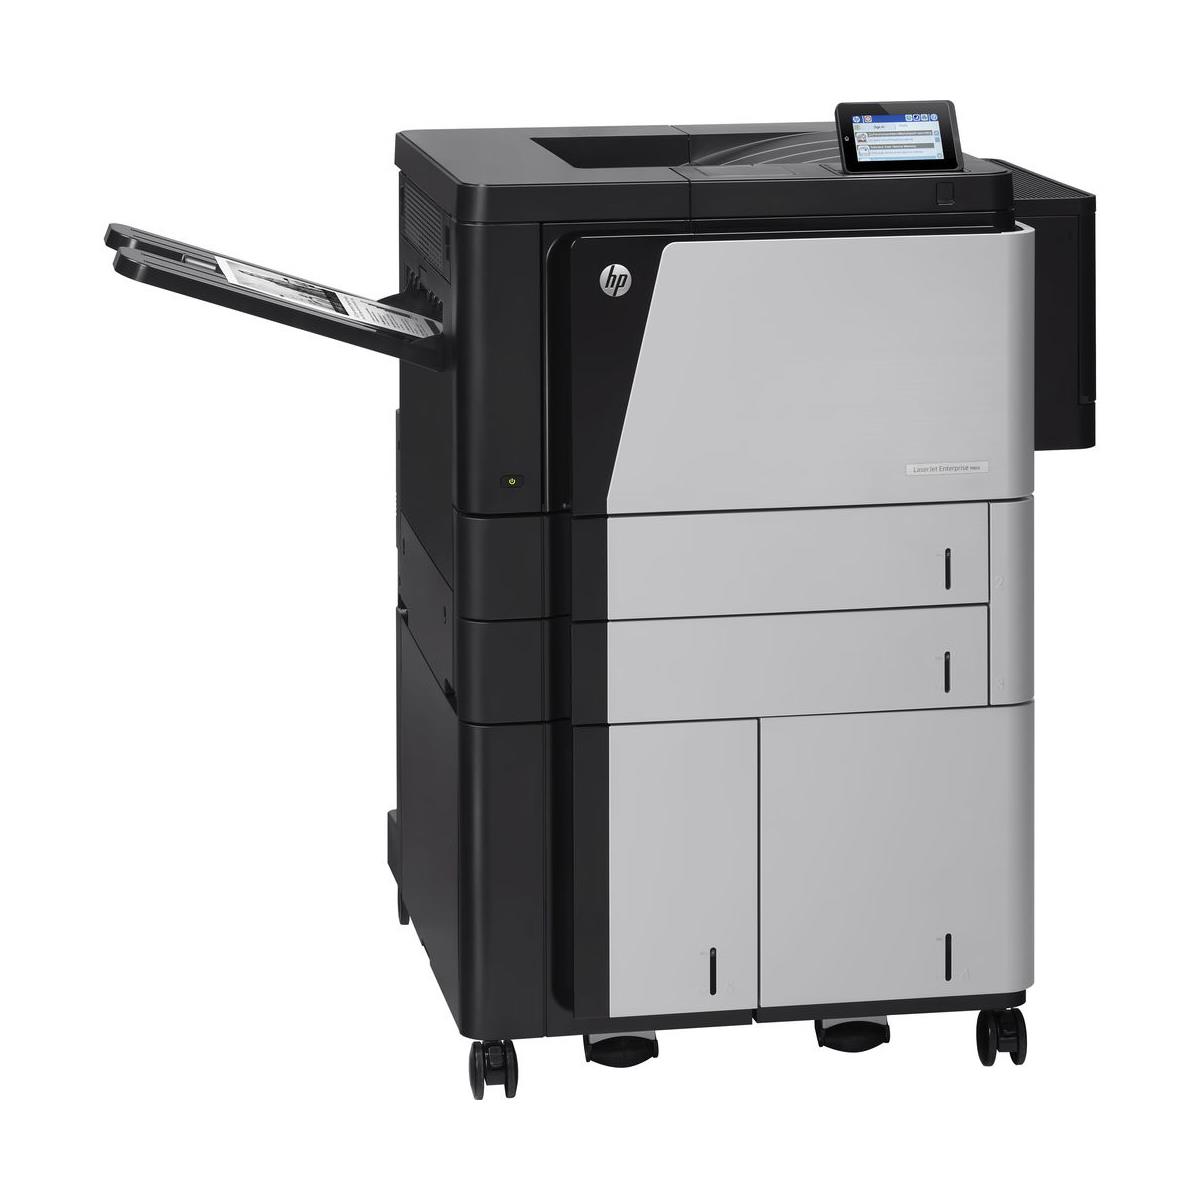 Image of HP LaserJet Enterprise M806x+ Black and White Laser Printer